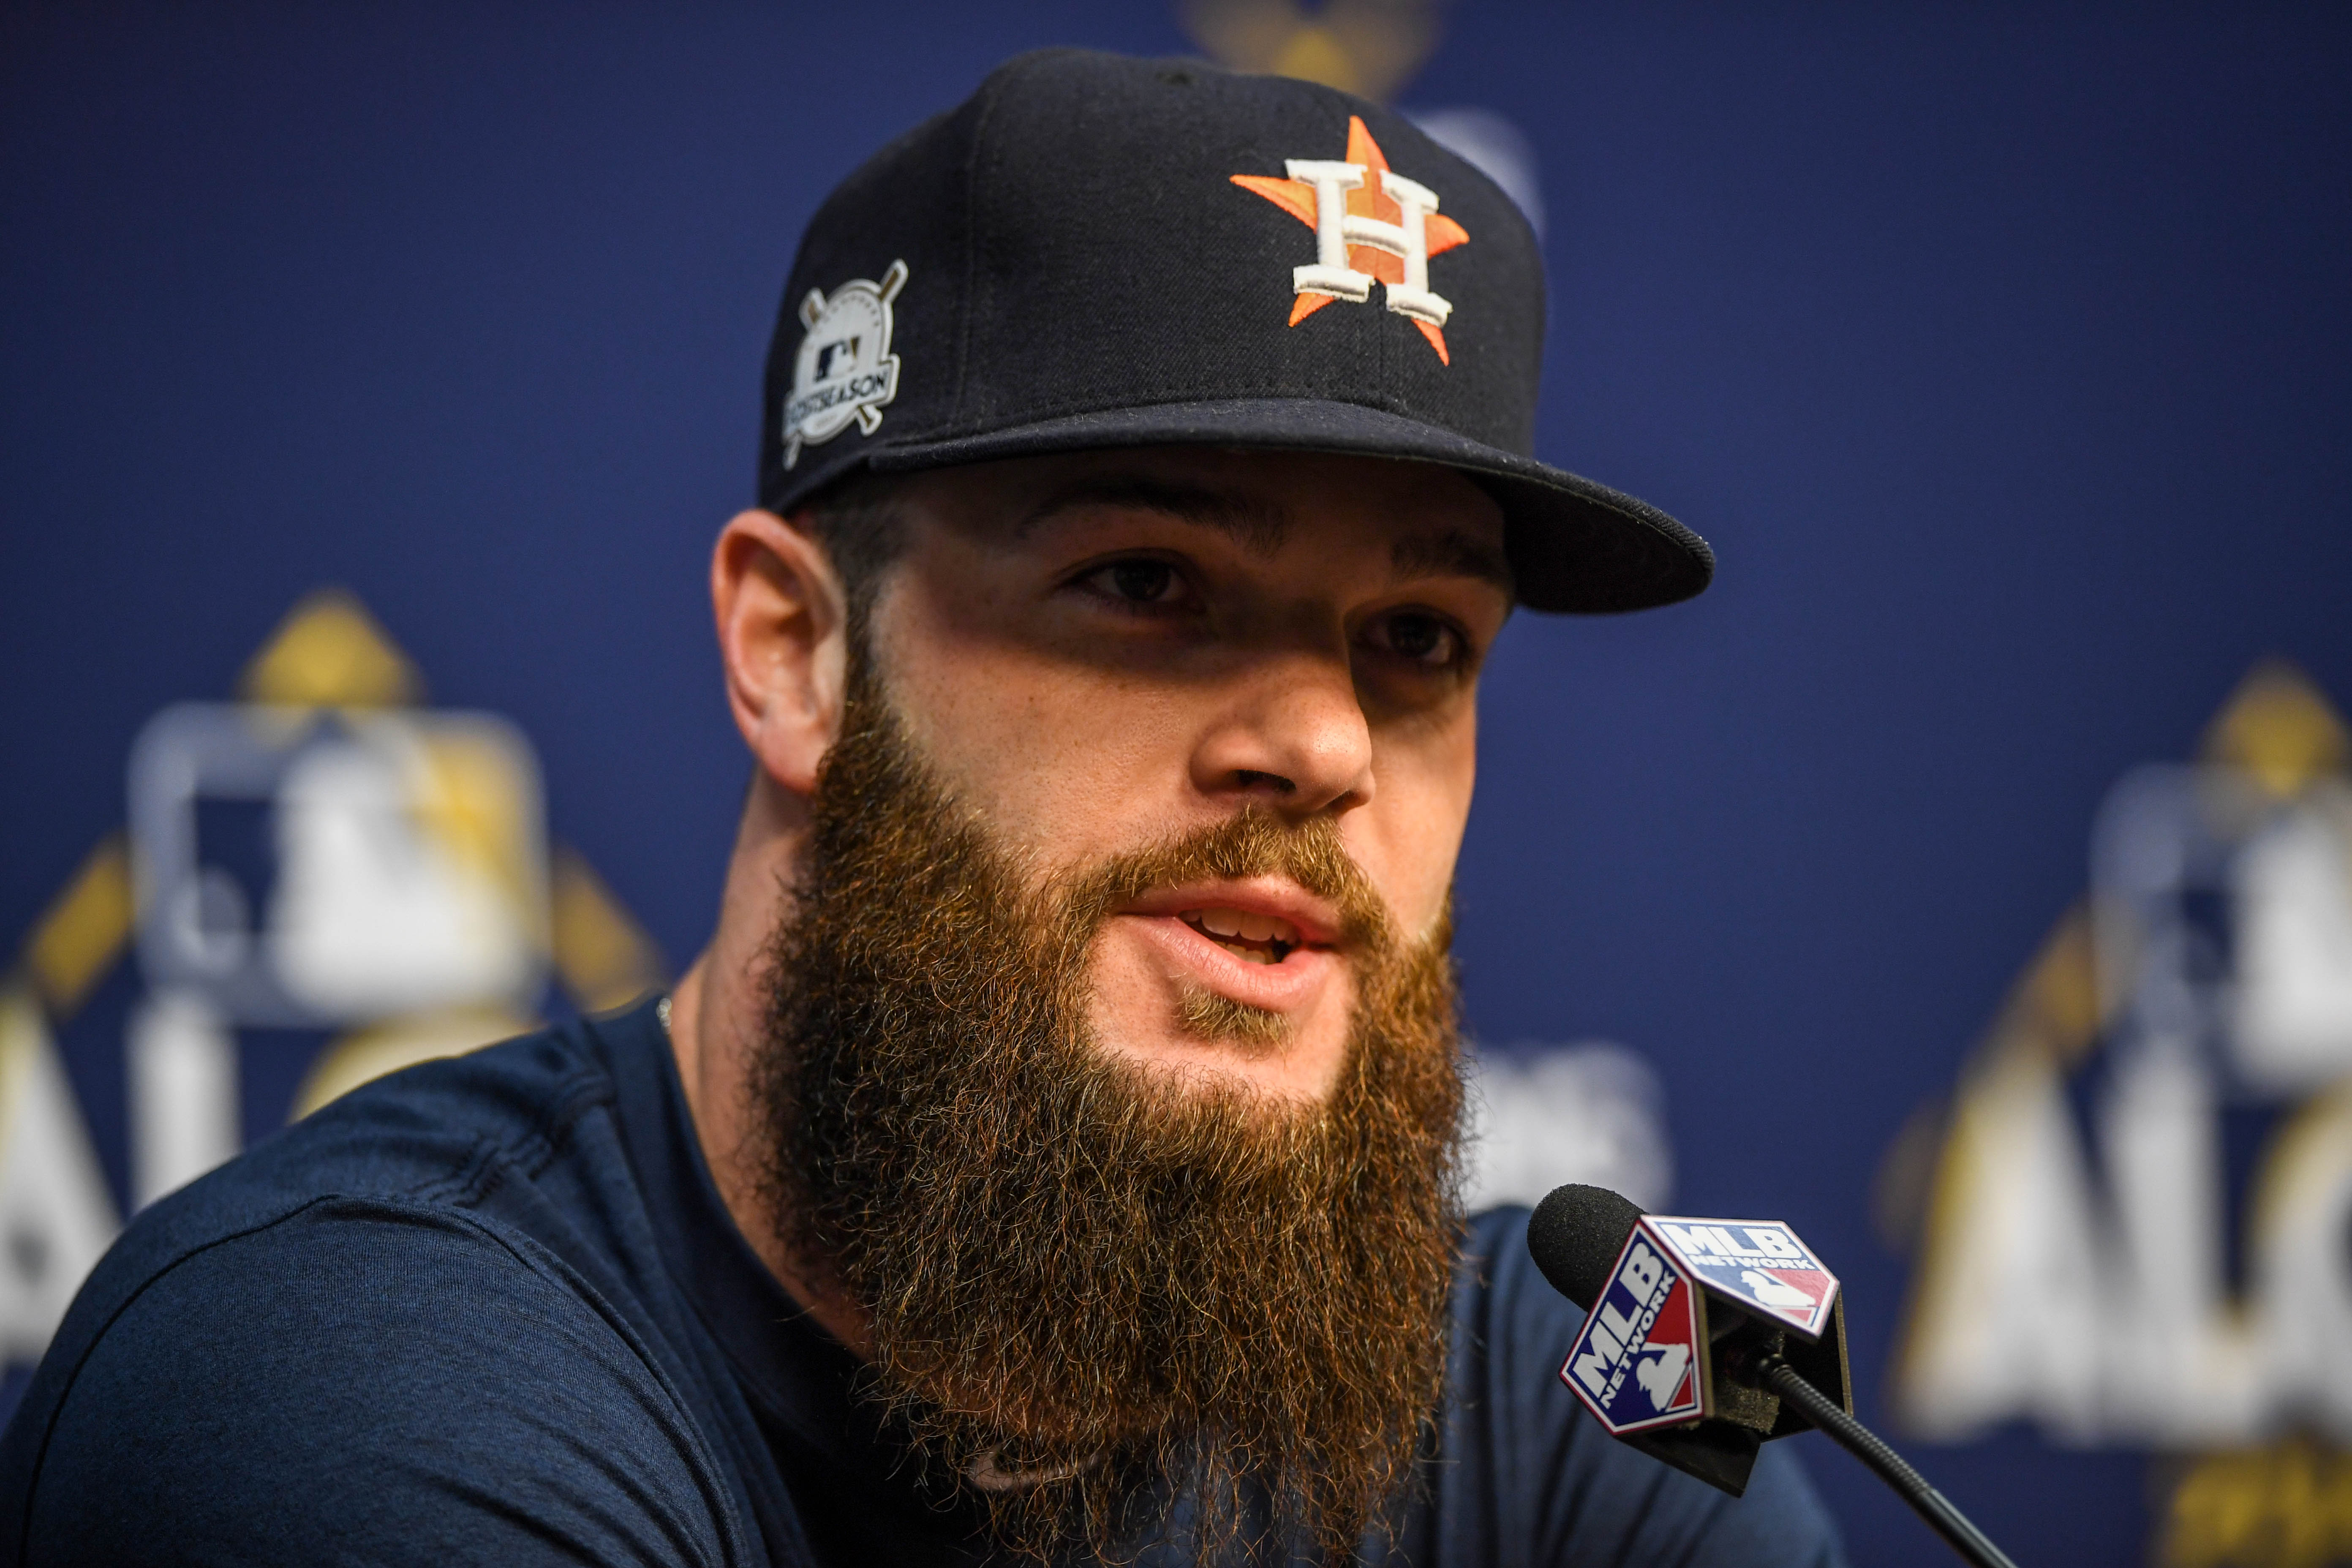 People - Photos  Bald men with beards, Houston astros baseball, Houston  astros